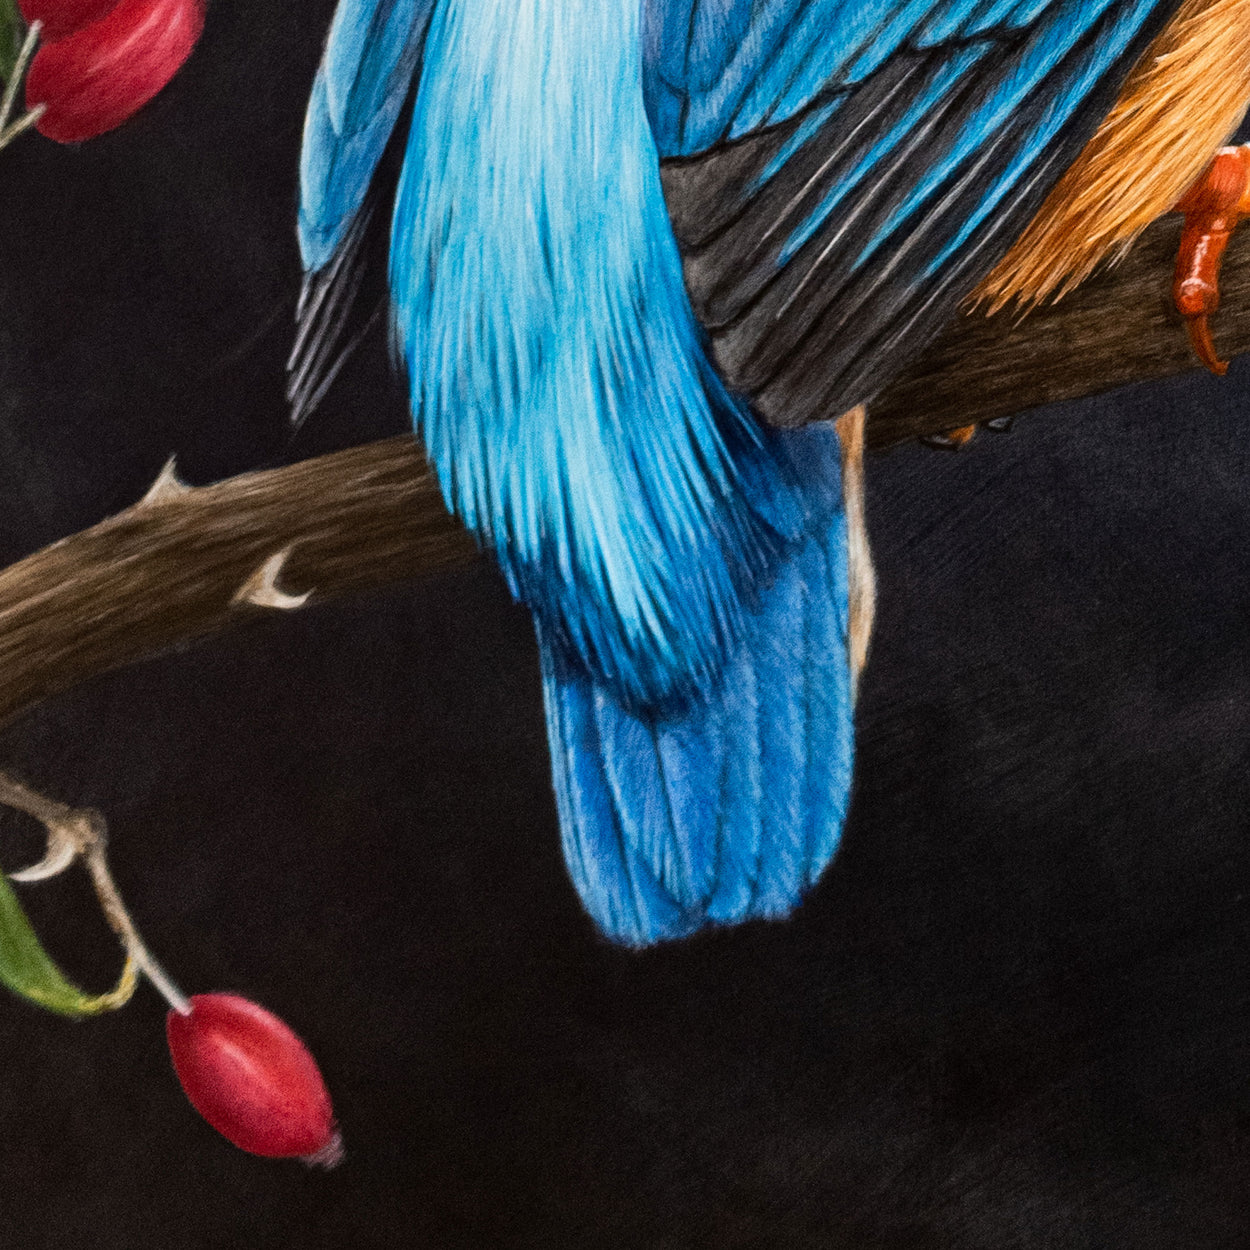 Kingfisher Painting Close-up 3 - Jill Dimond Bird Art